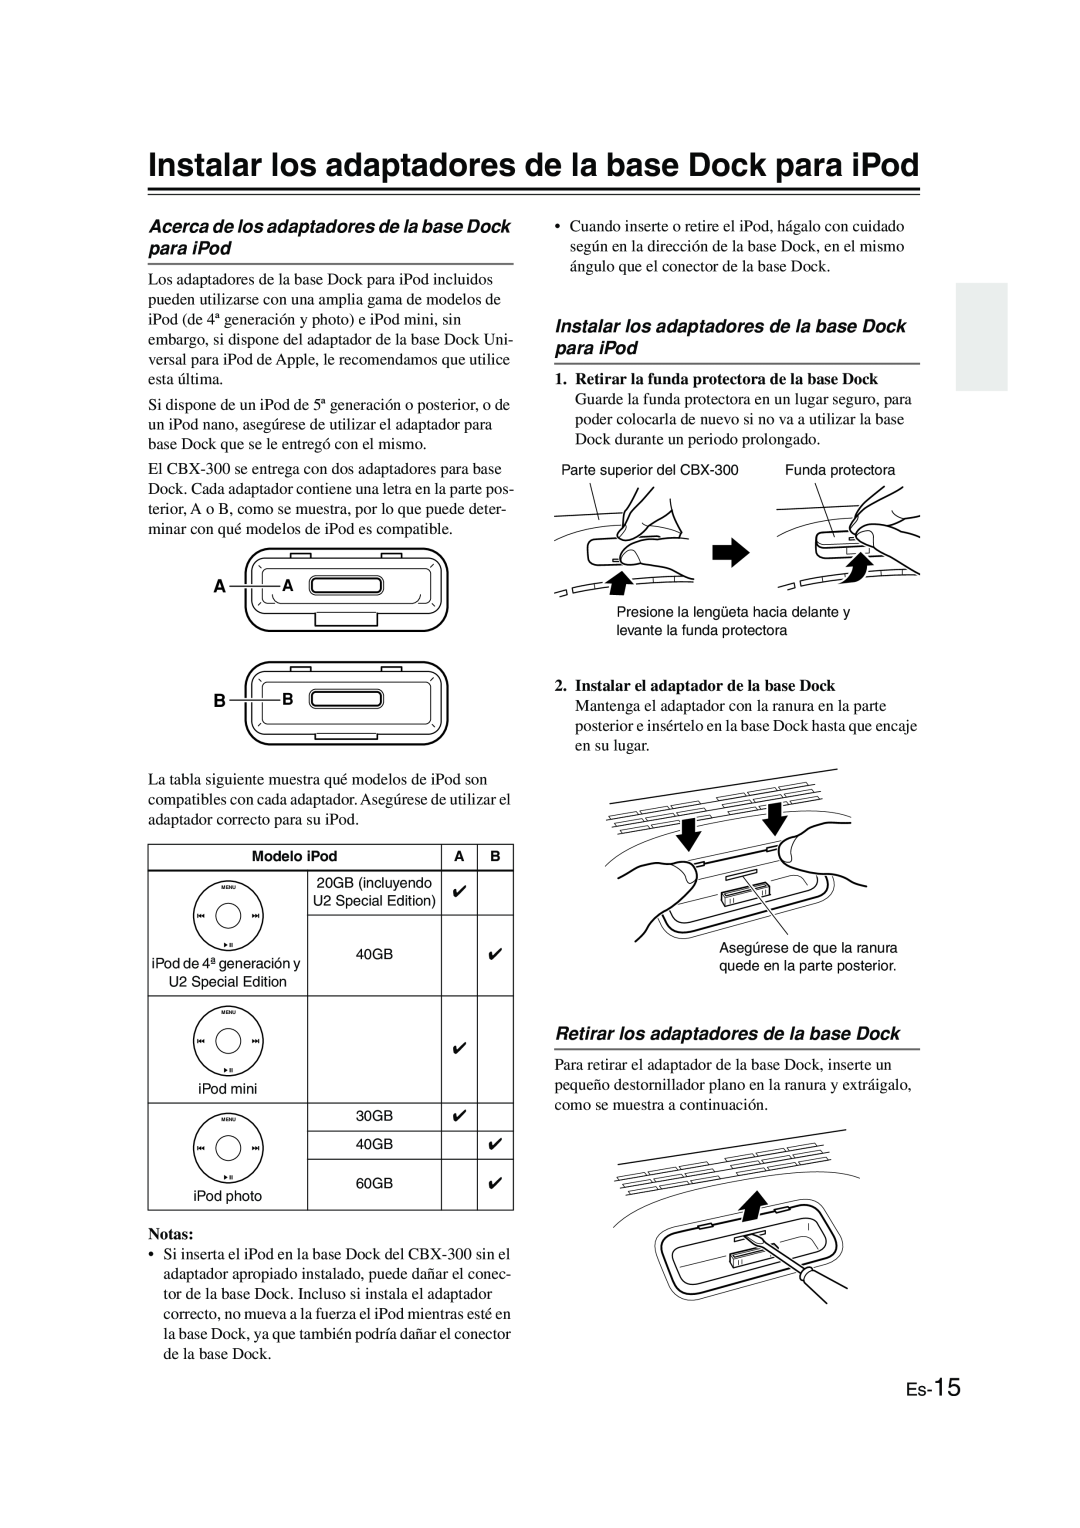 Onkyo CBX-300 instruction manual Retirar los adaptadores de la base Dock, Es-15, A A B B, Notas 